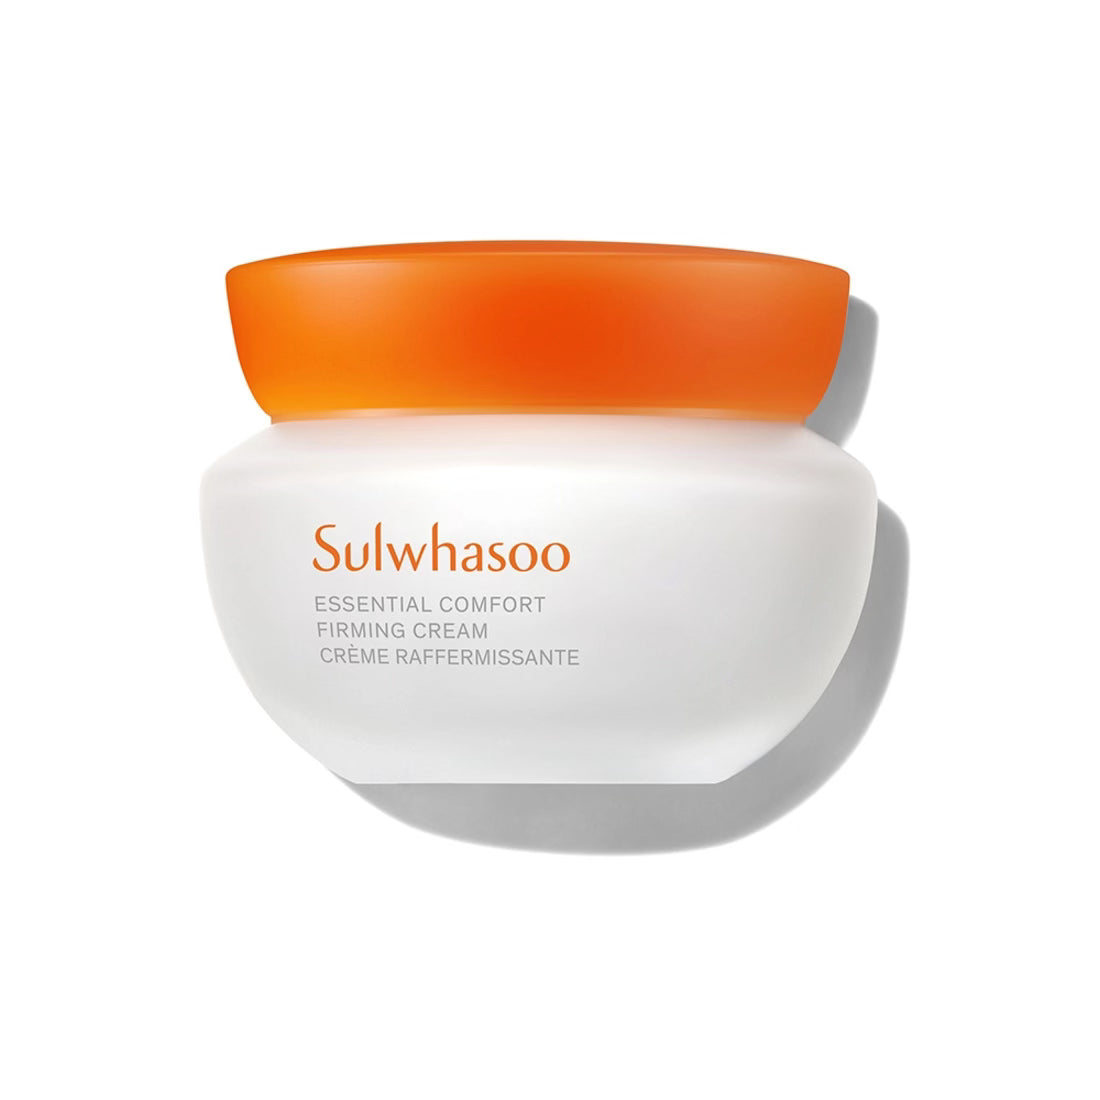 Sulwhasoo Essential Comfort Firming Cream